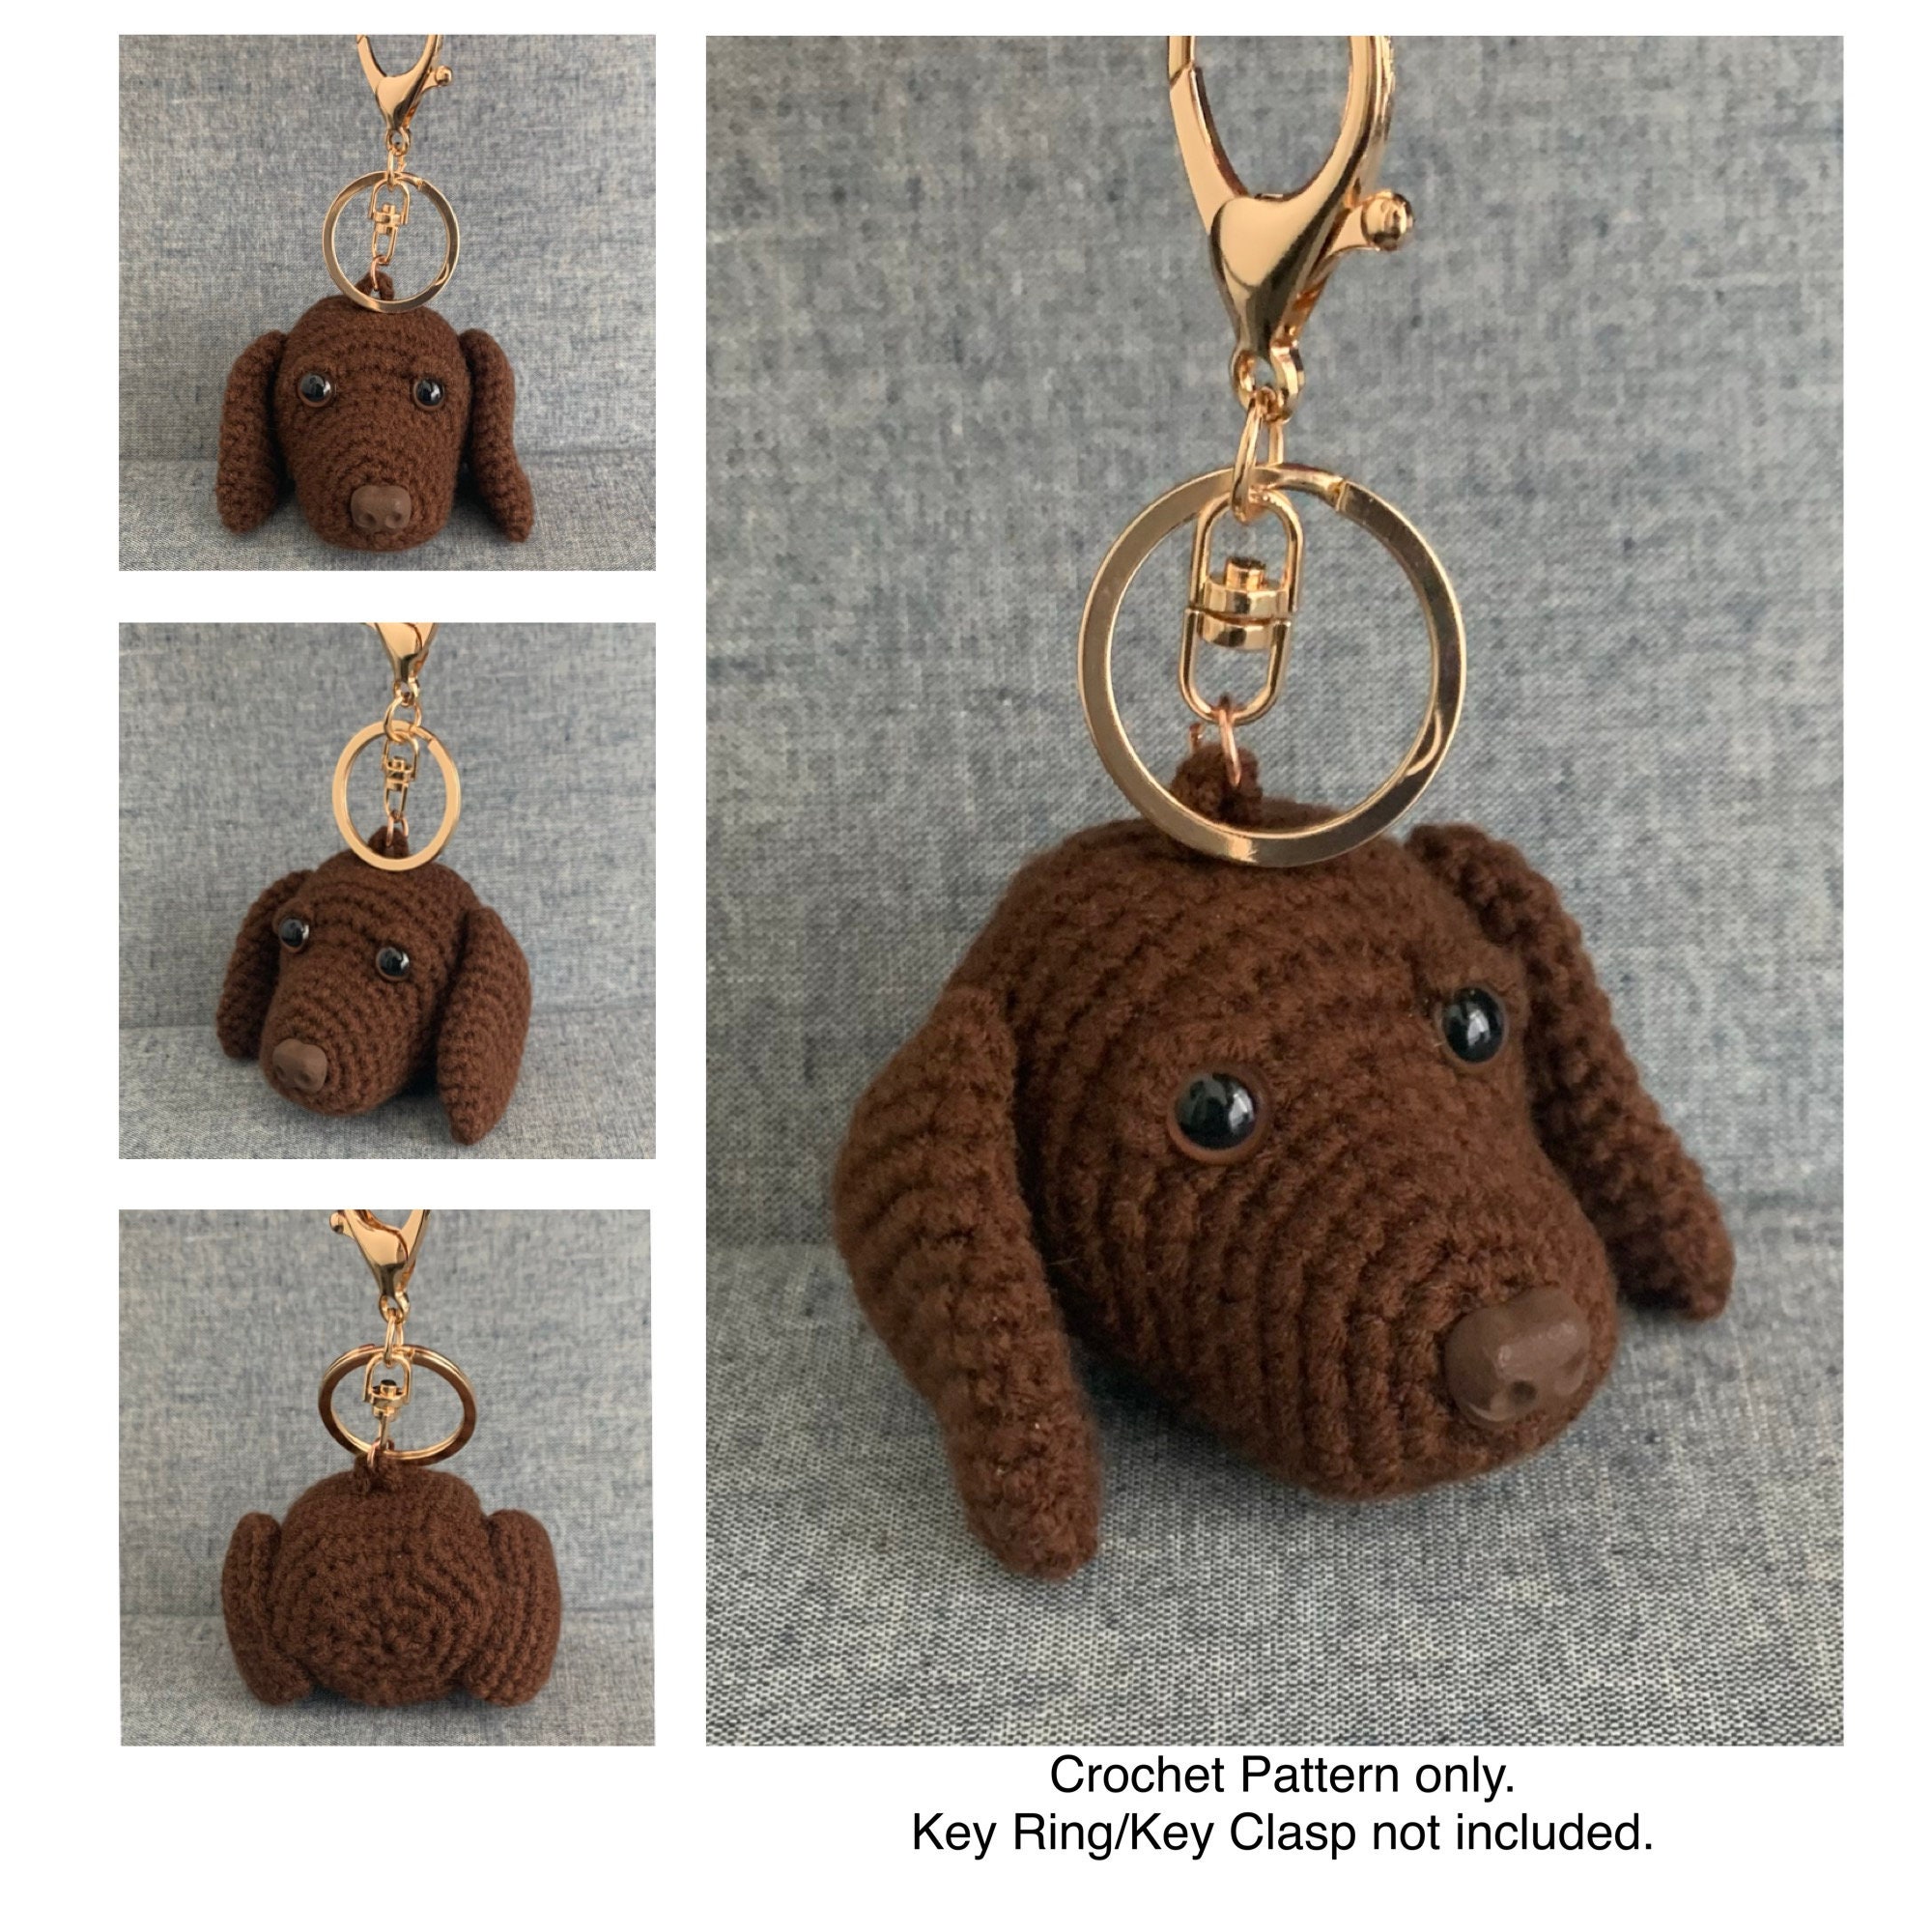 Leather Charm Keychain Smiling Labrador Dog Charm Bag Charm 